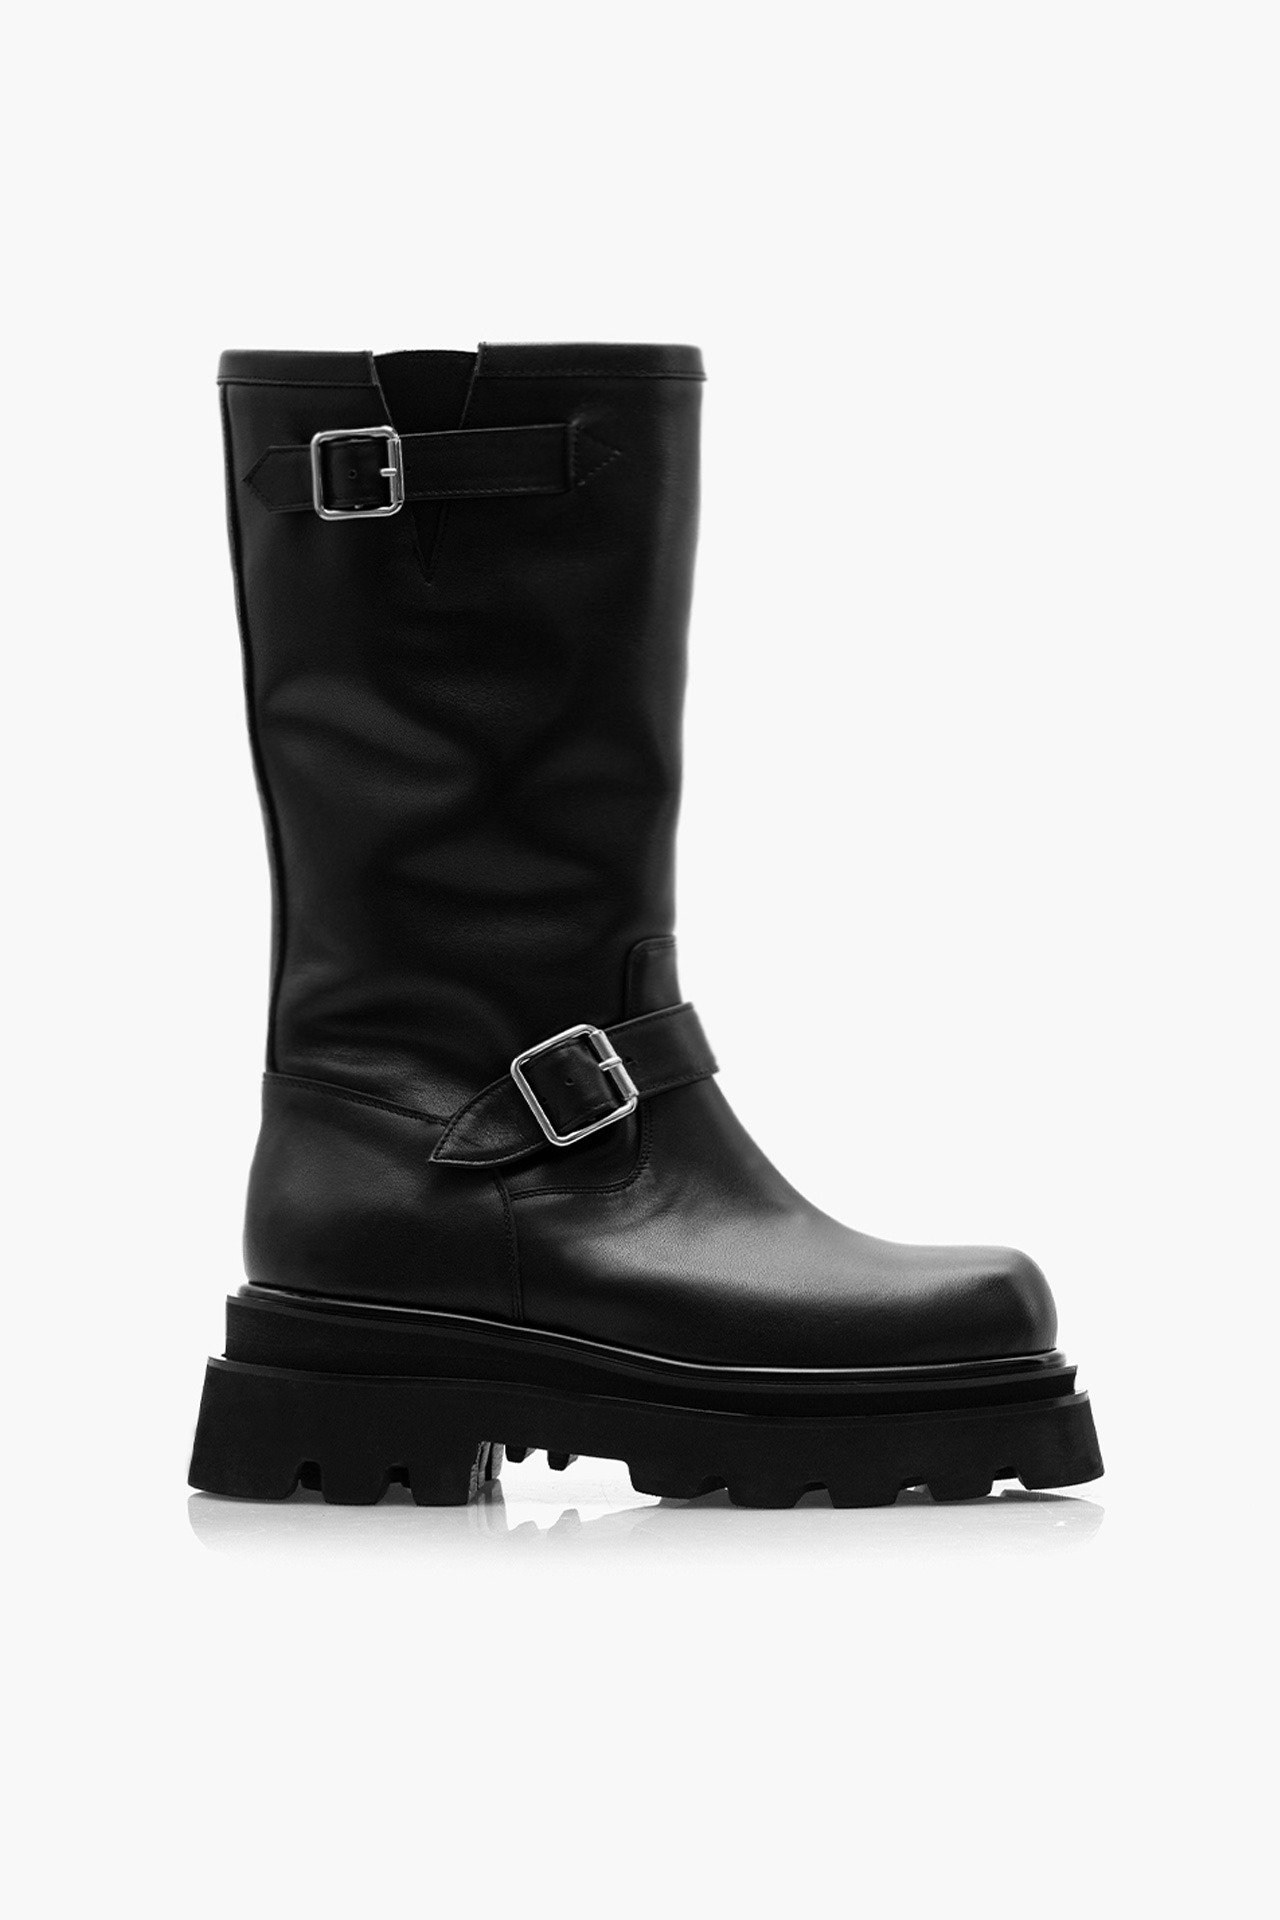 [Woman] 545 Mila engineer boots Black